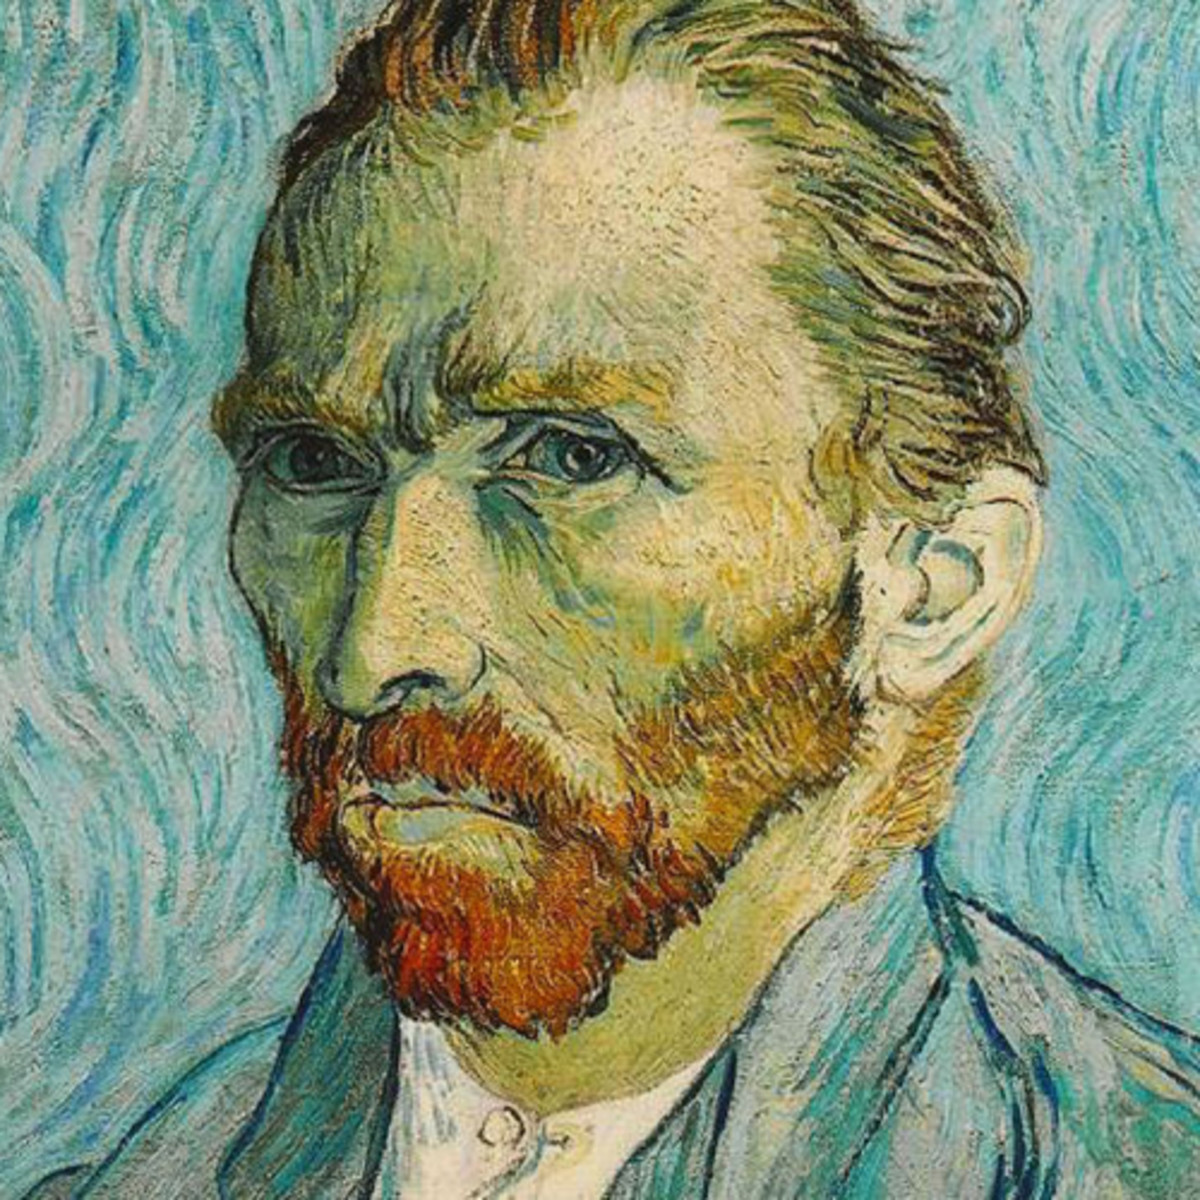 Do You Know Van Gogh?